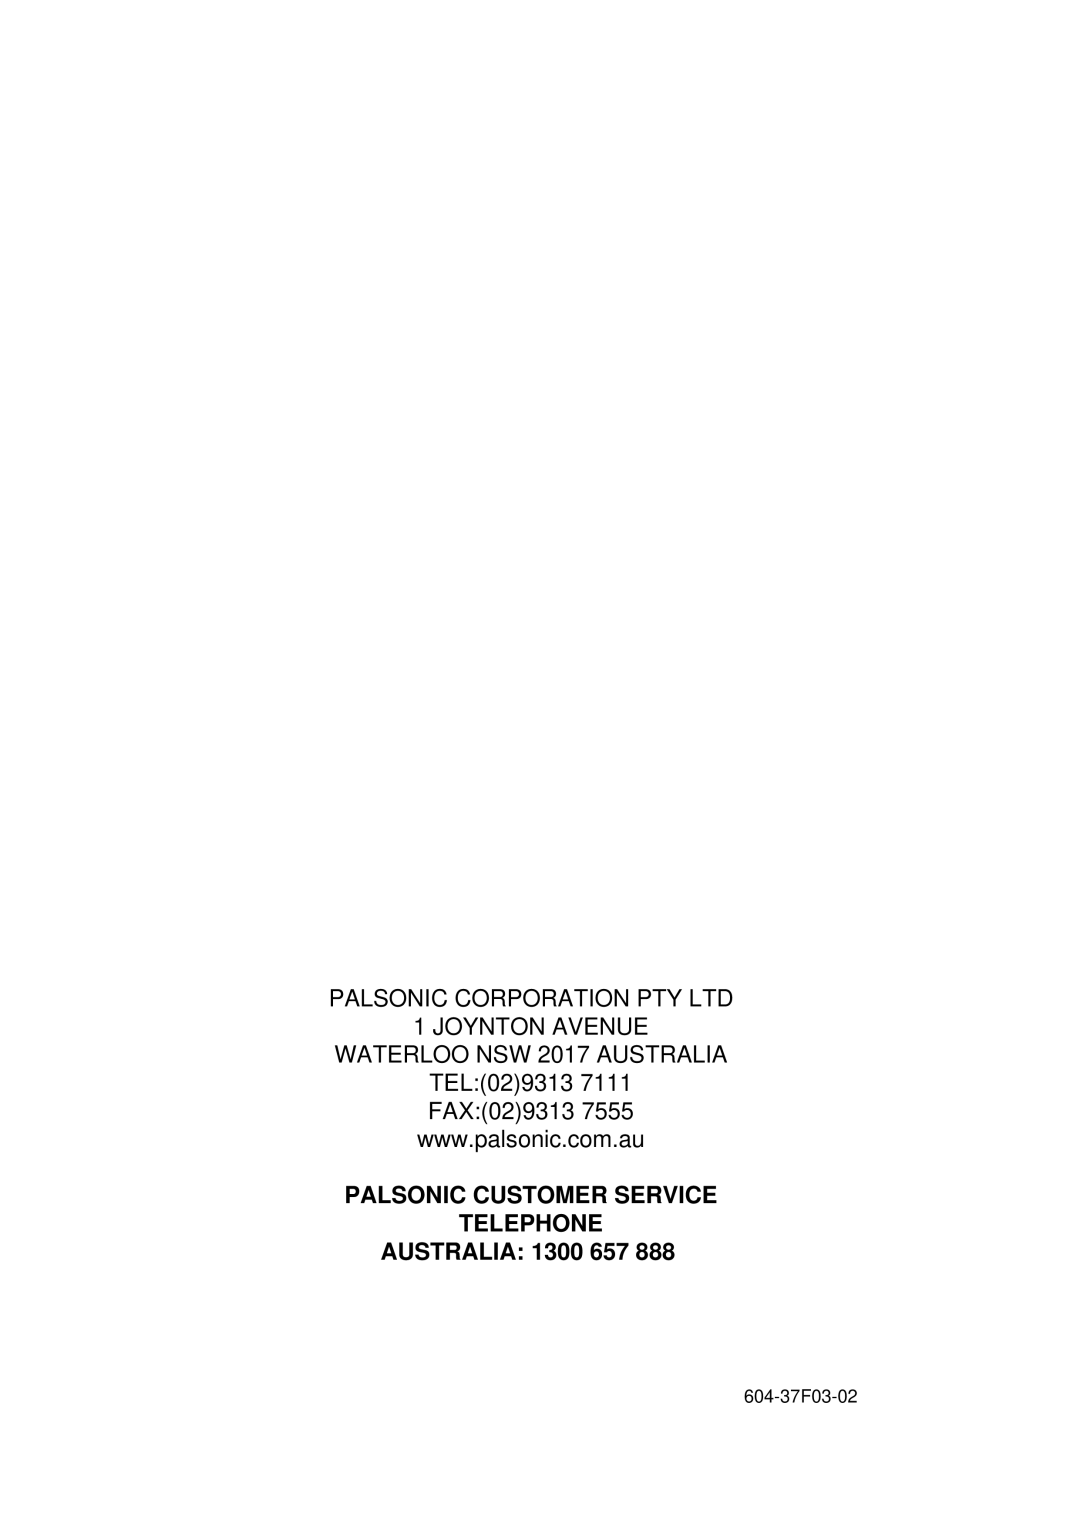 Palsonic 3499 PALSONIC CUSTOMER SERVICE TELEPHONE AUSTRALIA 1300 657, JOYNTON AVENUE WATERLOO NSW 2017 AUSTRALIA TEL029313 